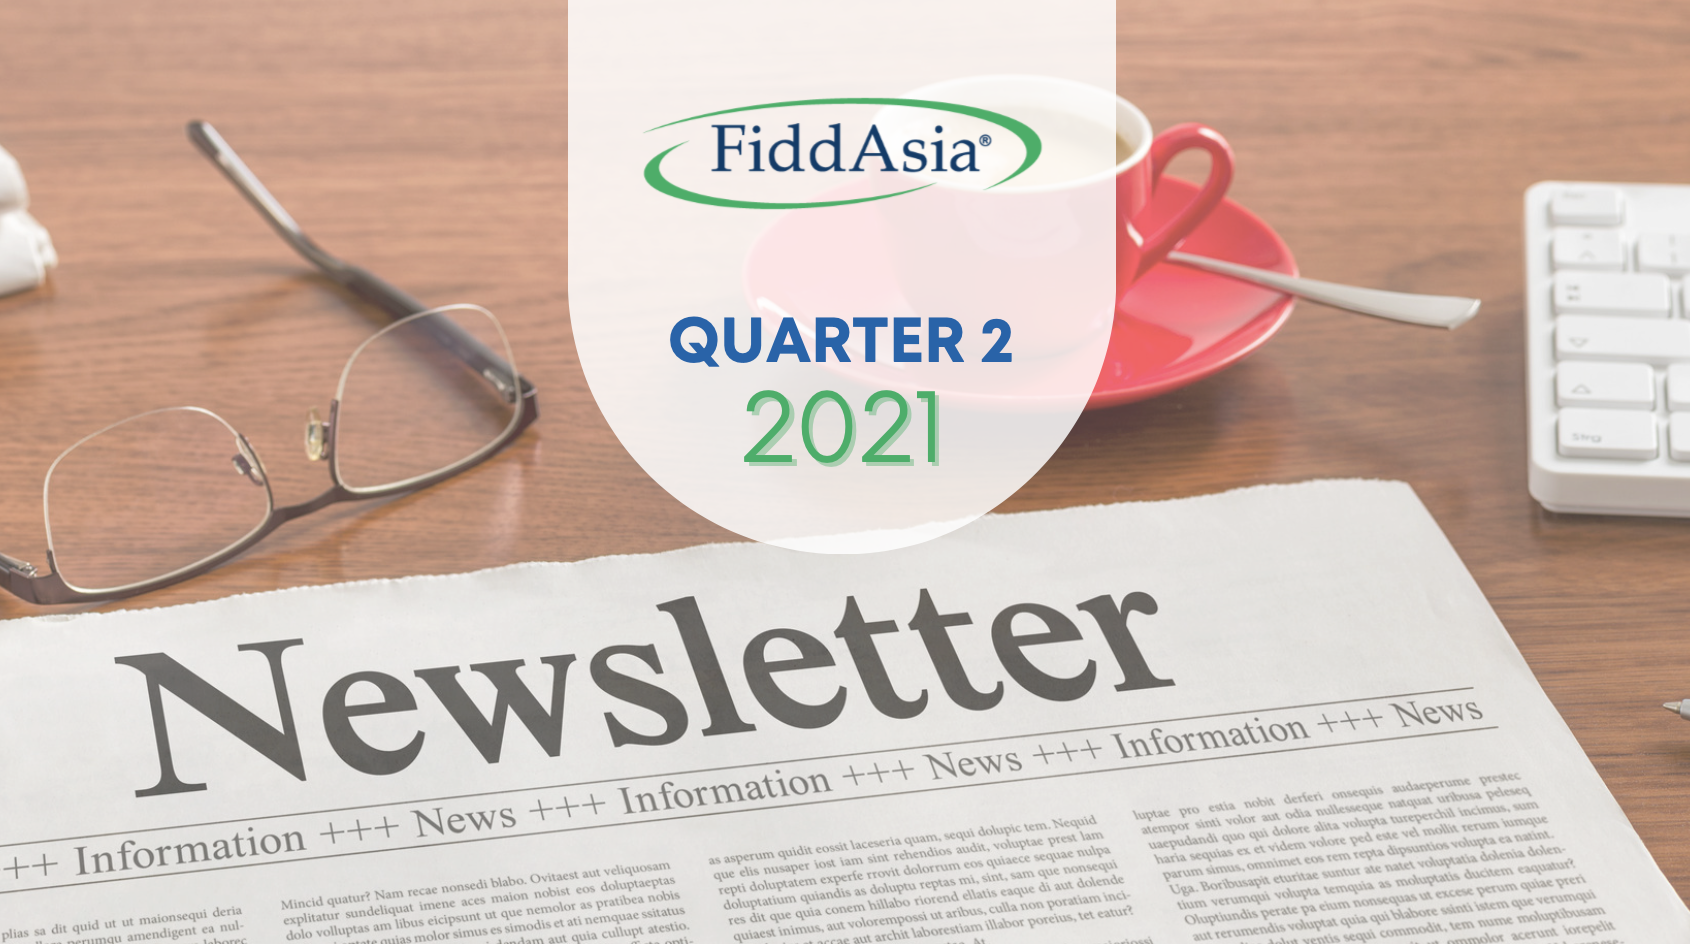 FiddAsia Newsletter Q2 2021